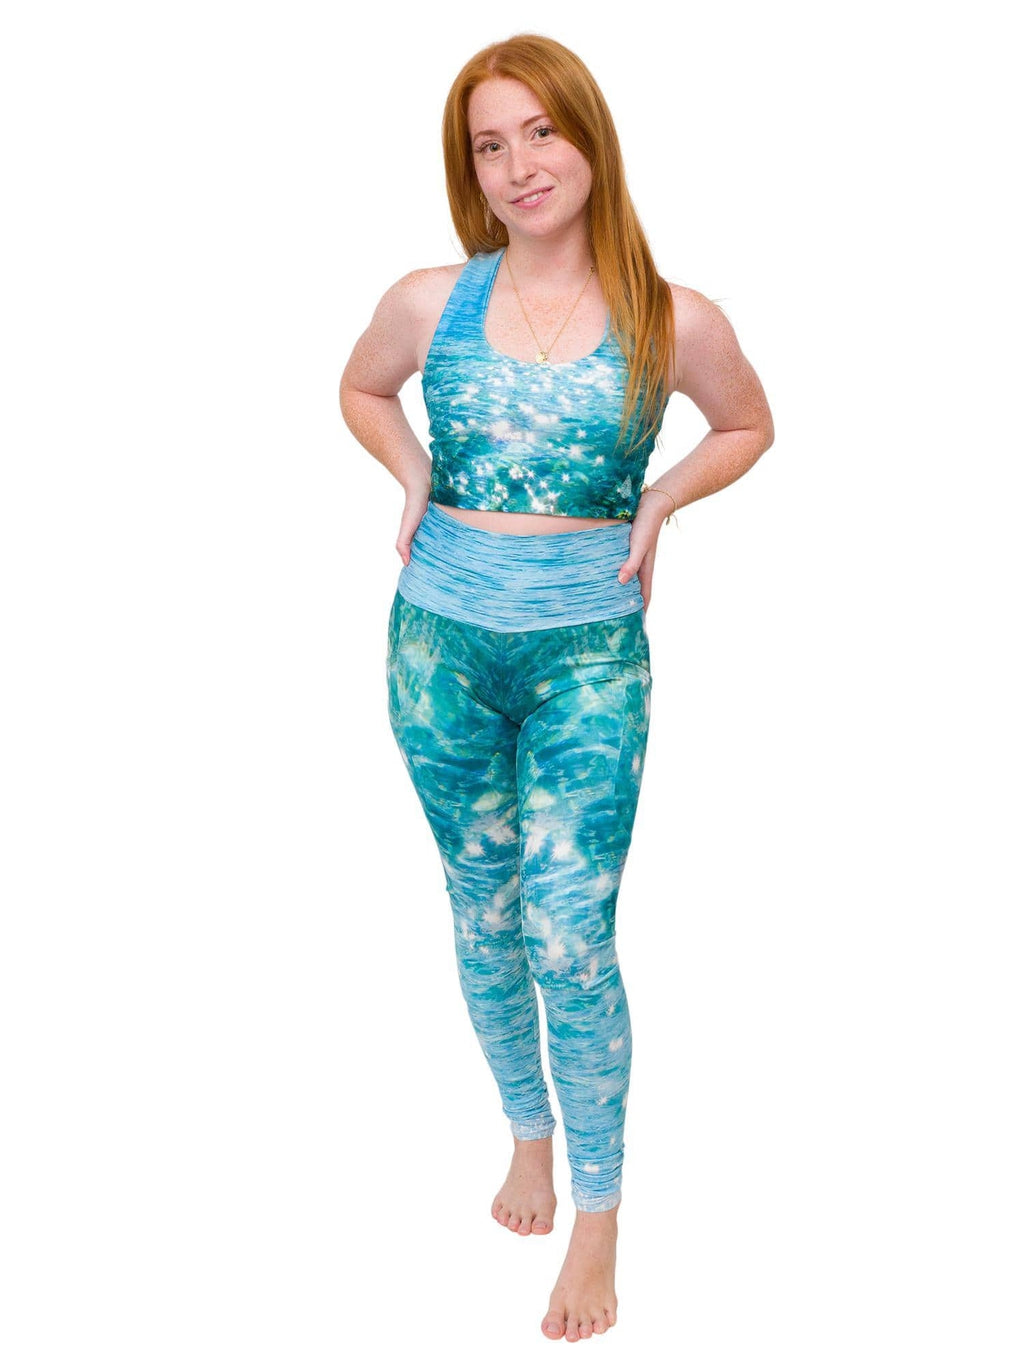 Web Shield - Women's Yoga Leggings - Cameron Creations Ltd.